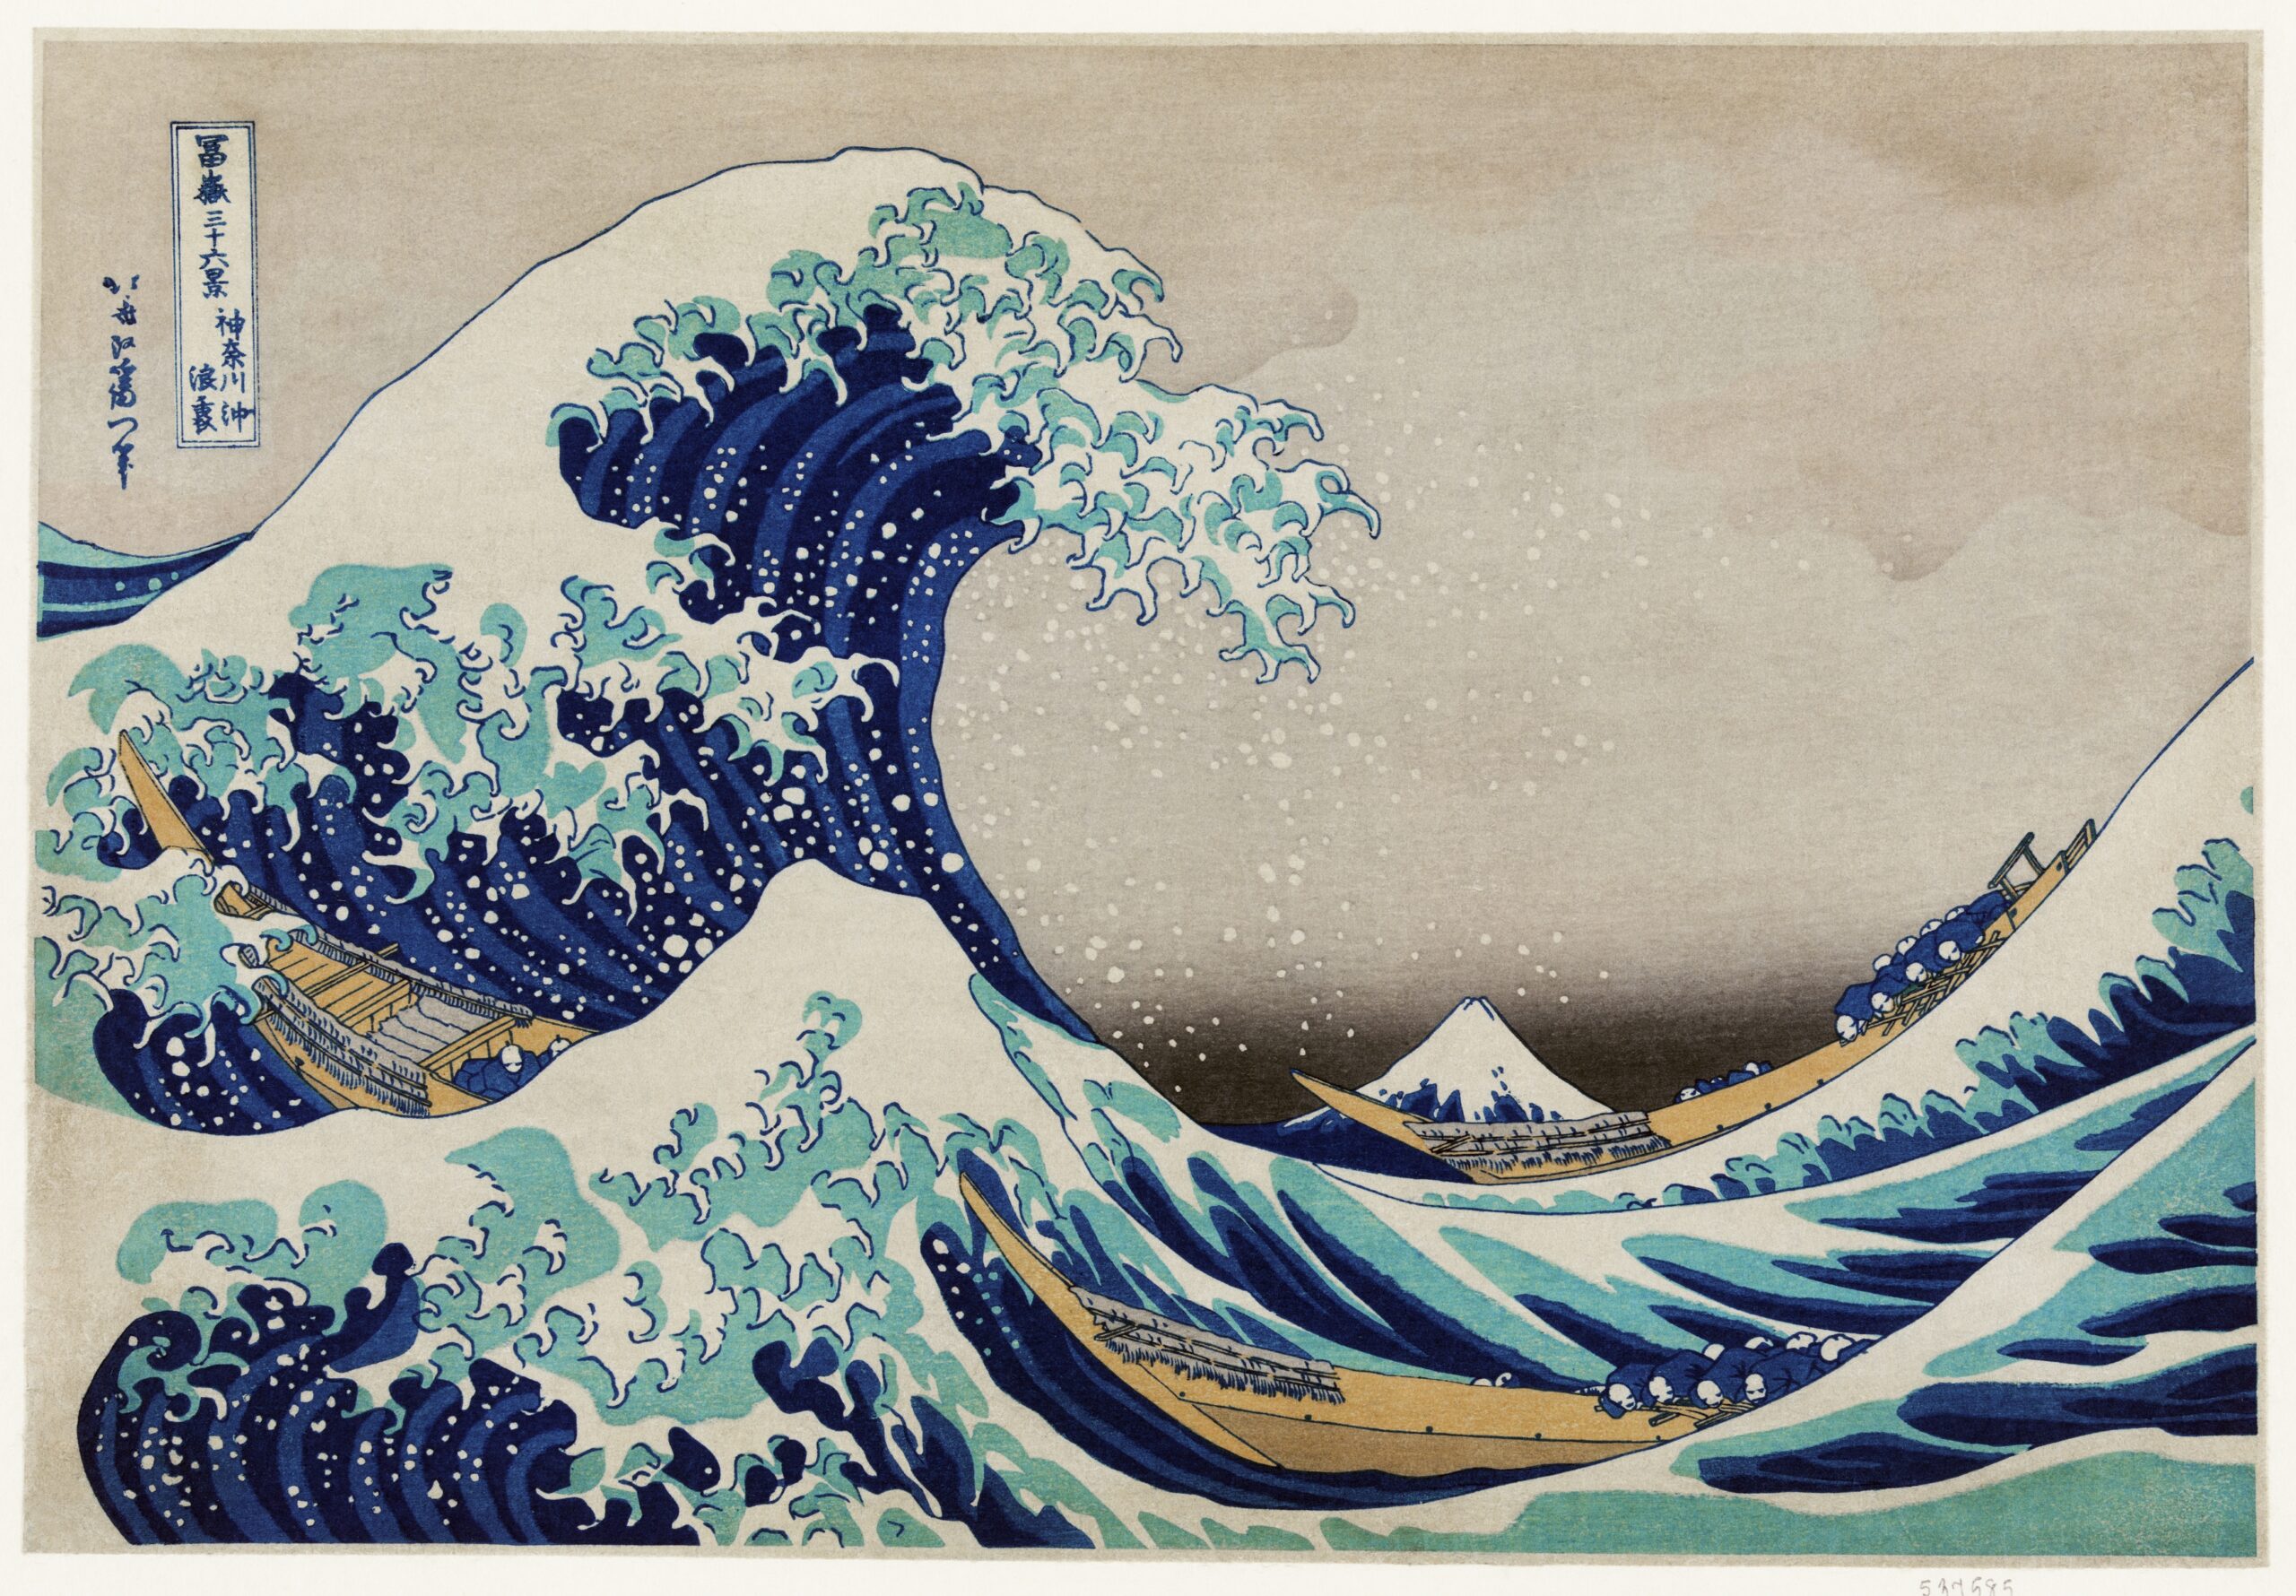 Katsushika Hokusai's The Great Wave off Kanagawa,